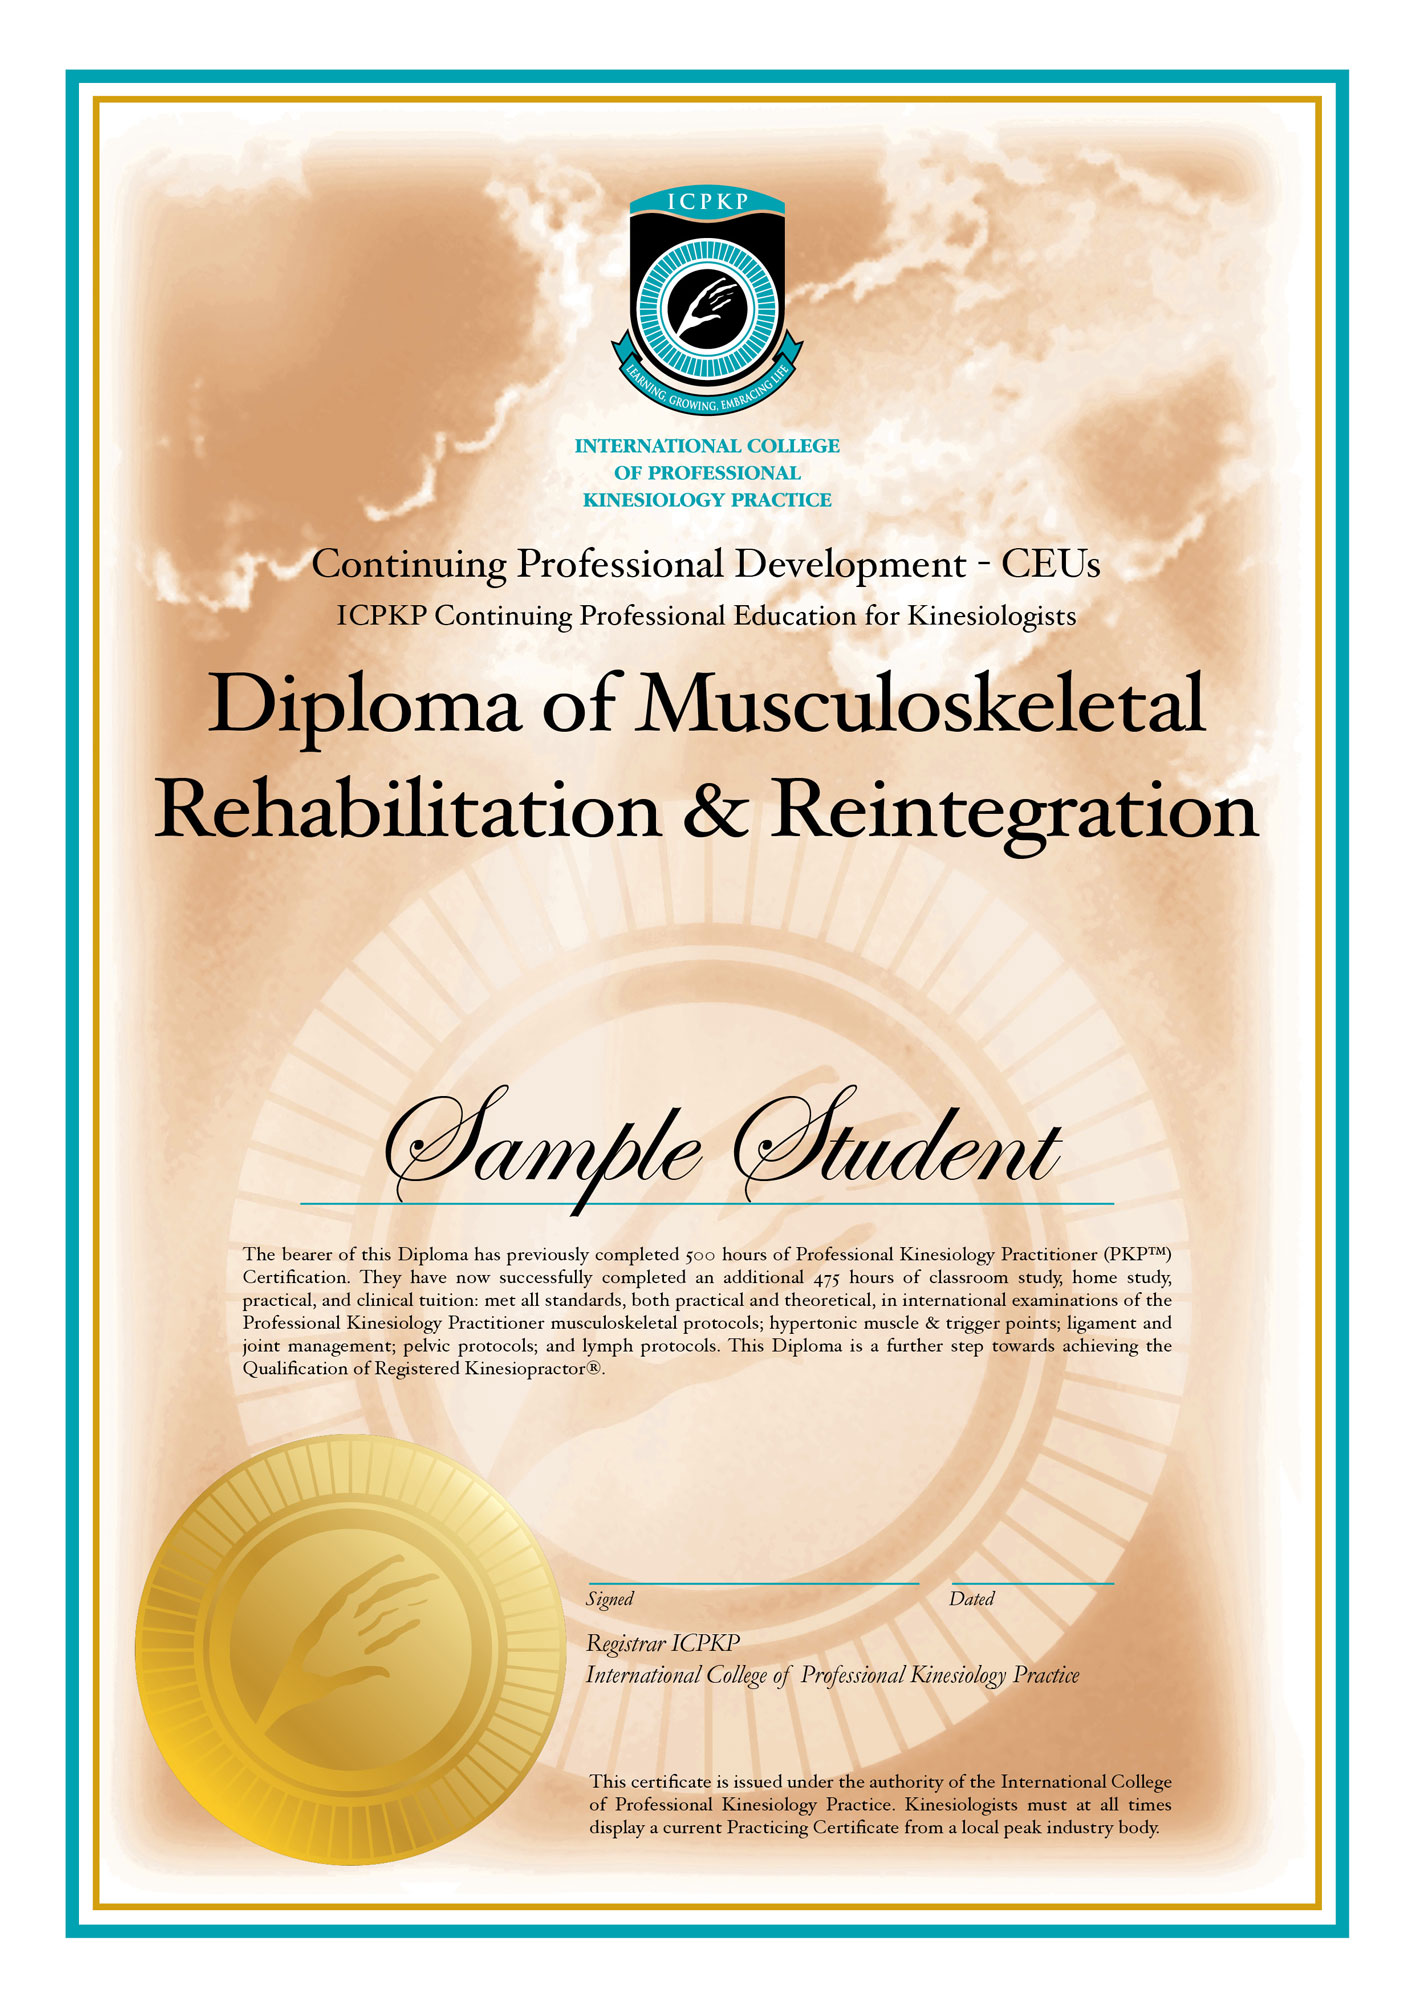 Diploma of Musculoskeletal Rehabilitation & Reintegration certificate